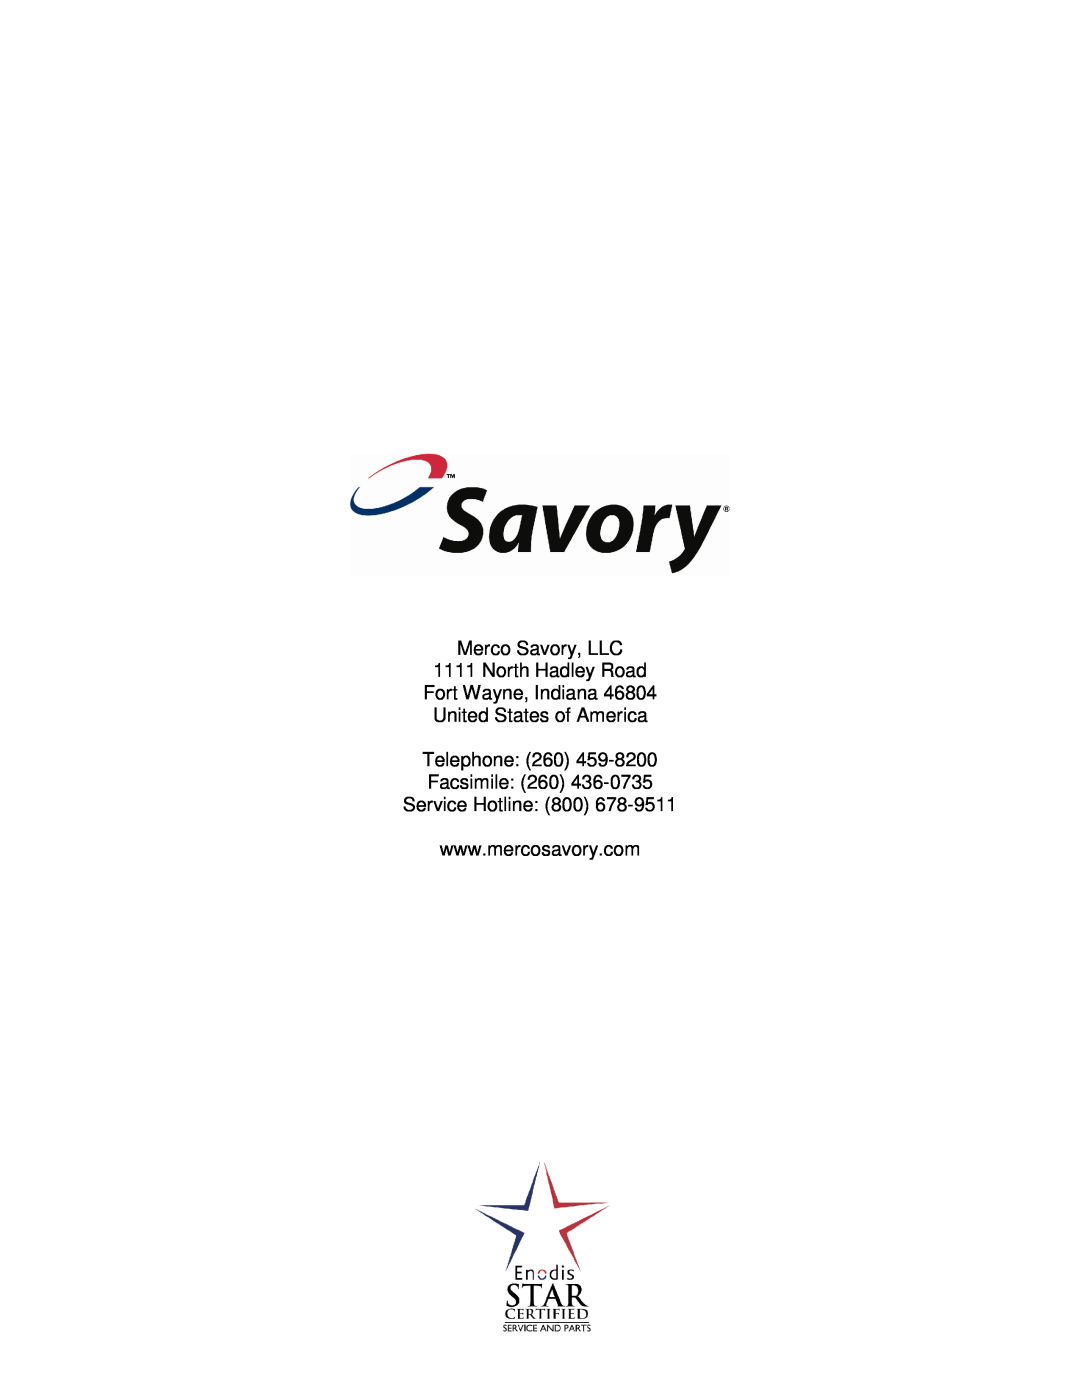 Merco Savory RT-2VSE, RT-2VSHO Merco Savory, LLC 1111 North Hadley Road, Fort Wayne, Indiana United States of America 